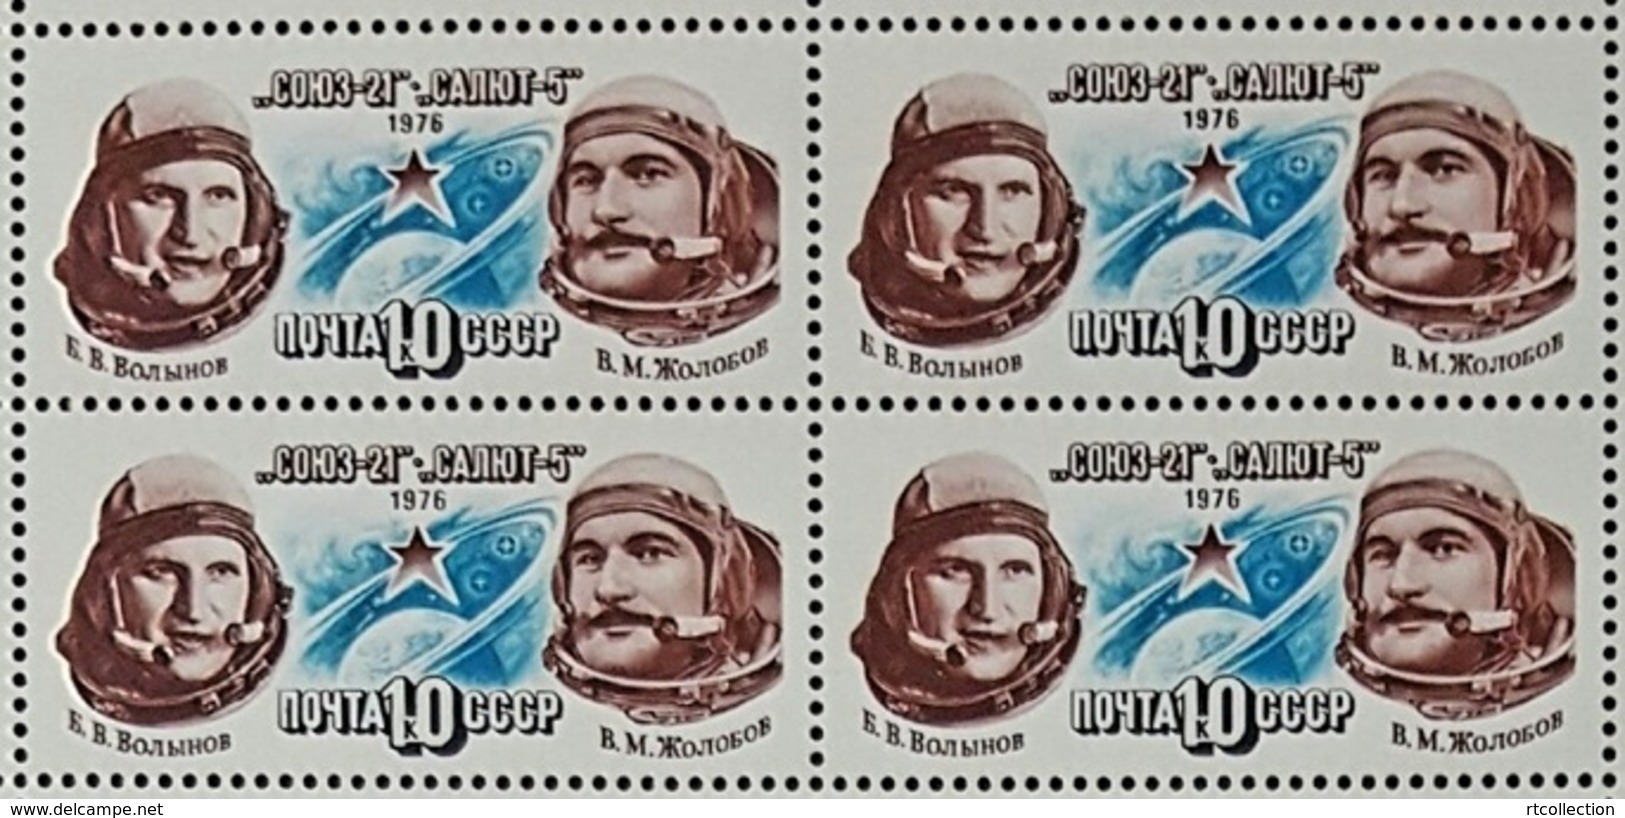 USSR Russia 1976 Block Space Flight Soyuz 21 Spacemen Volynov Zholobov People Sciences Astronaut Cosmonaut Stamps MNH - Russia & URSS